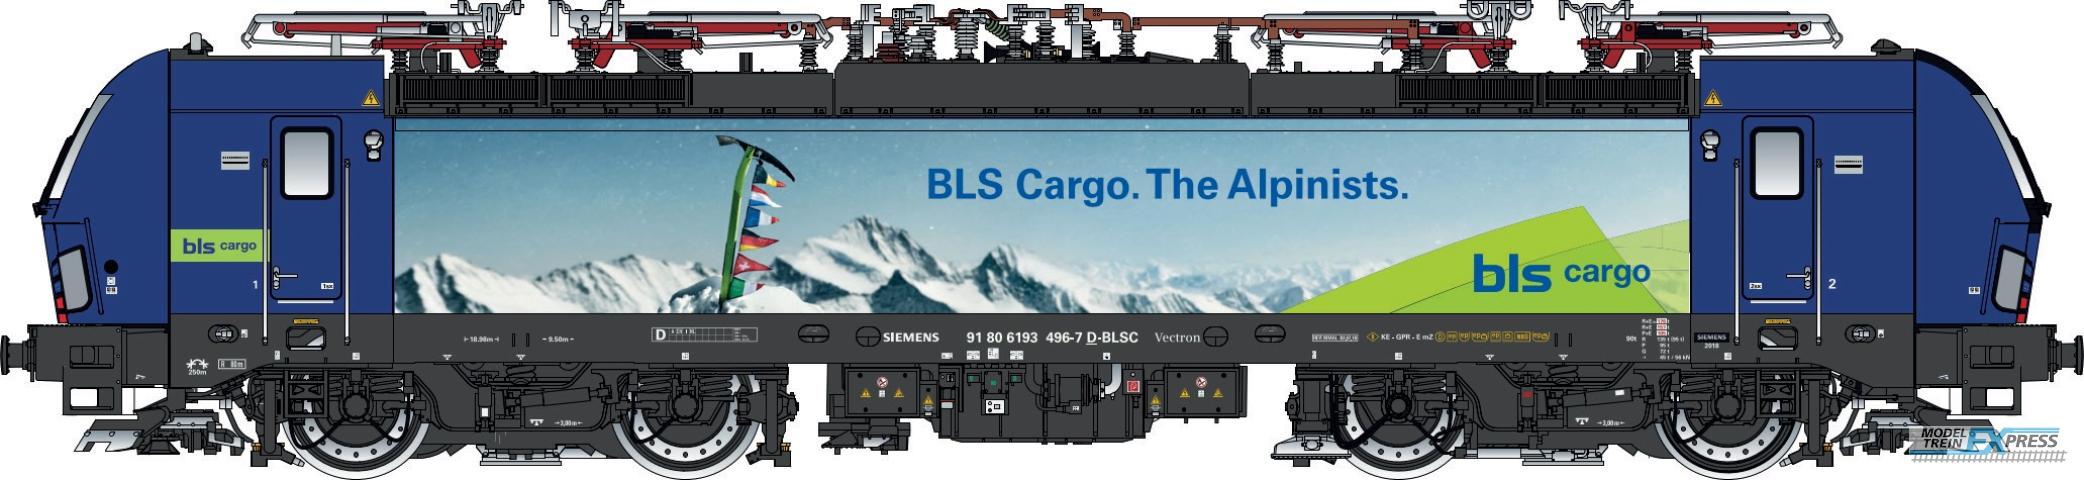 LS Models 17616S BLS Cargo/Hupac Vectron MS, 91 80 6193 496-7 D-BLSC, 4 pantographs  /  Ep. VI  /  ---  /  HO  /  AC SOUND  /  1 P.